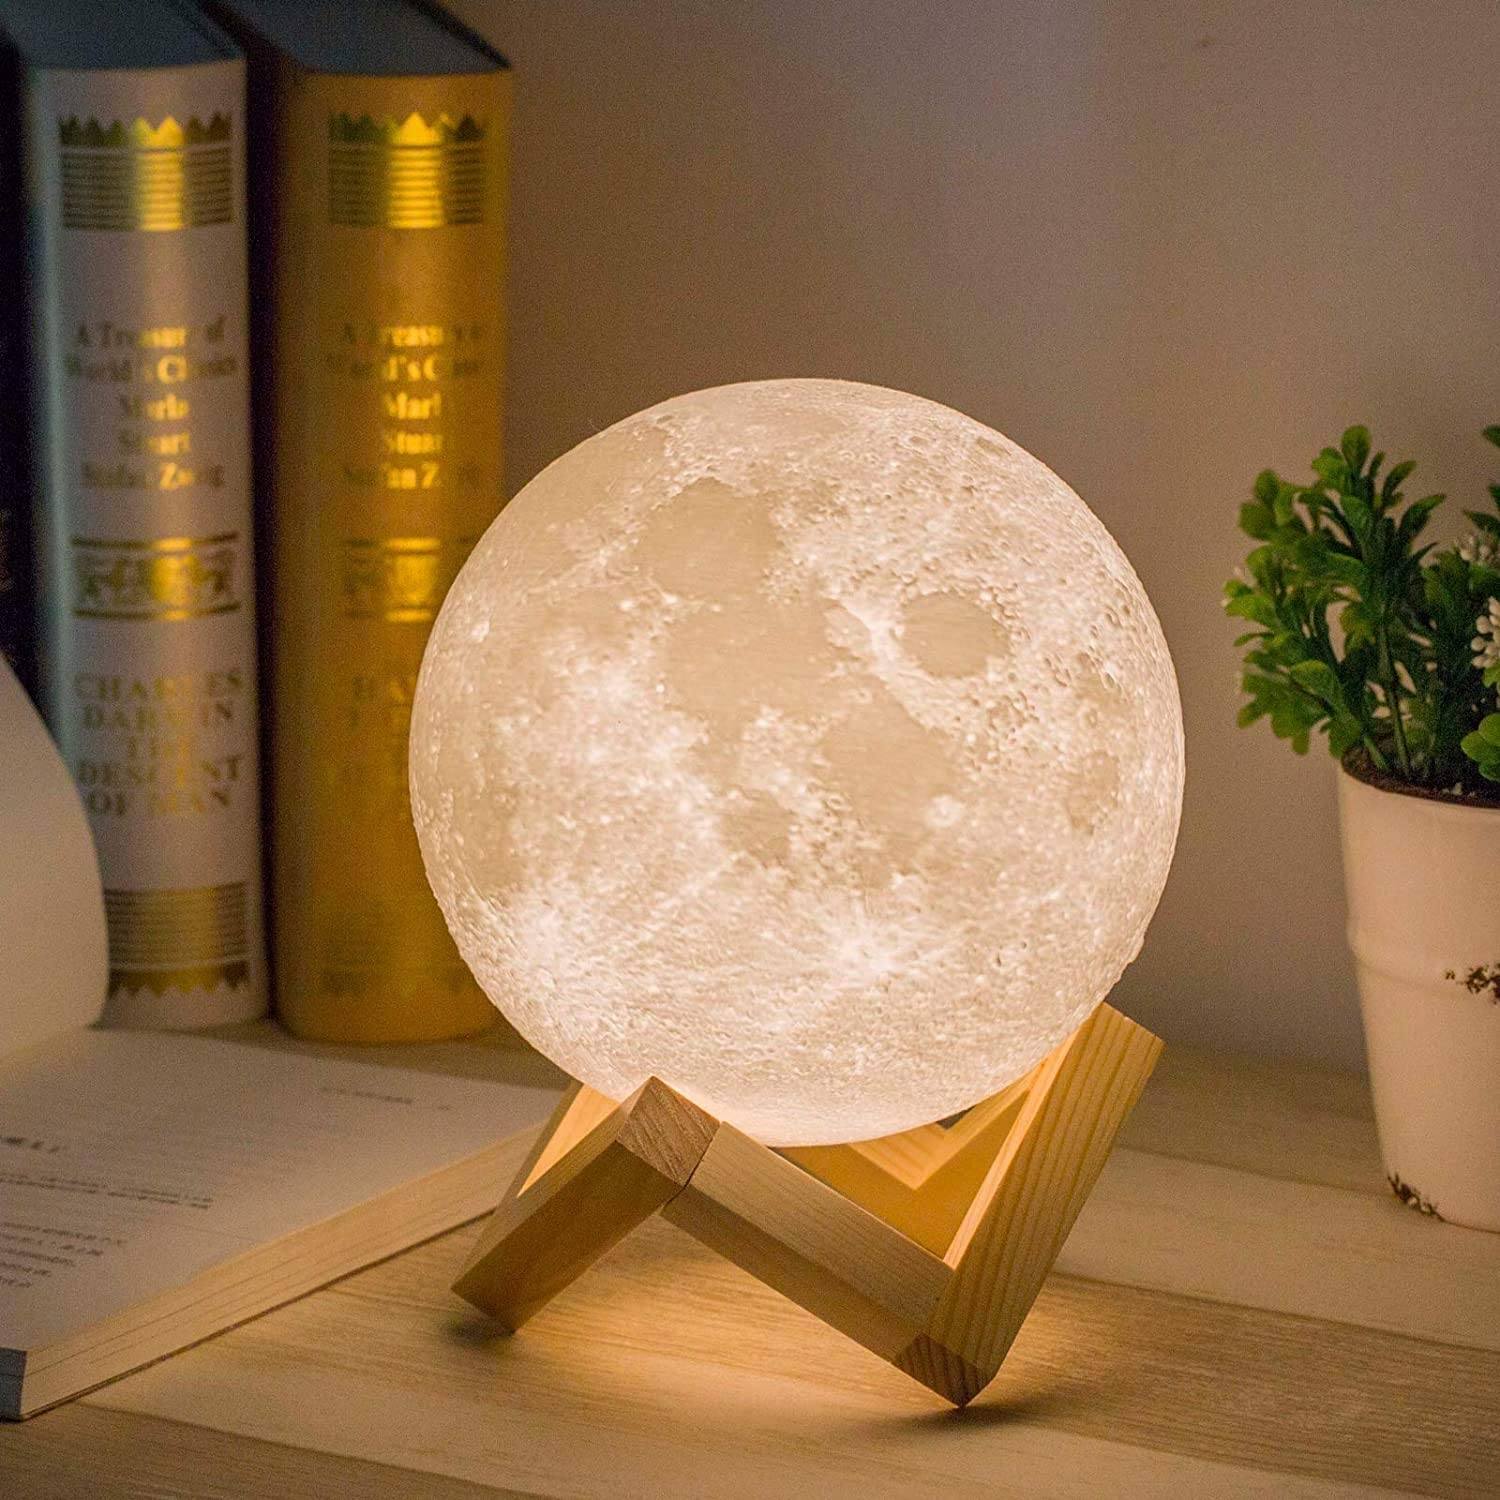 Mydethun Moon Lamp, 5.9 inch - 3D Printed...